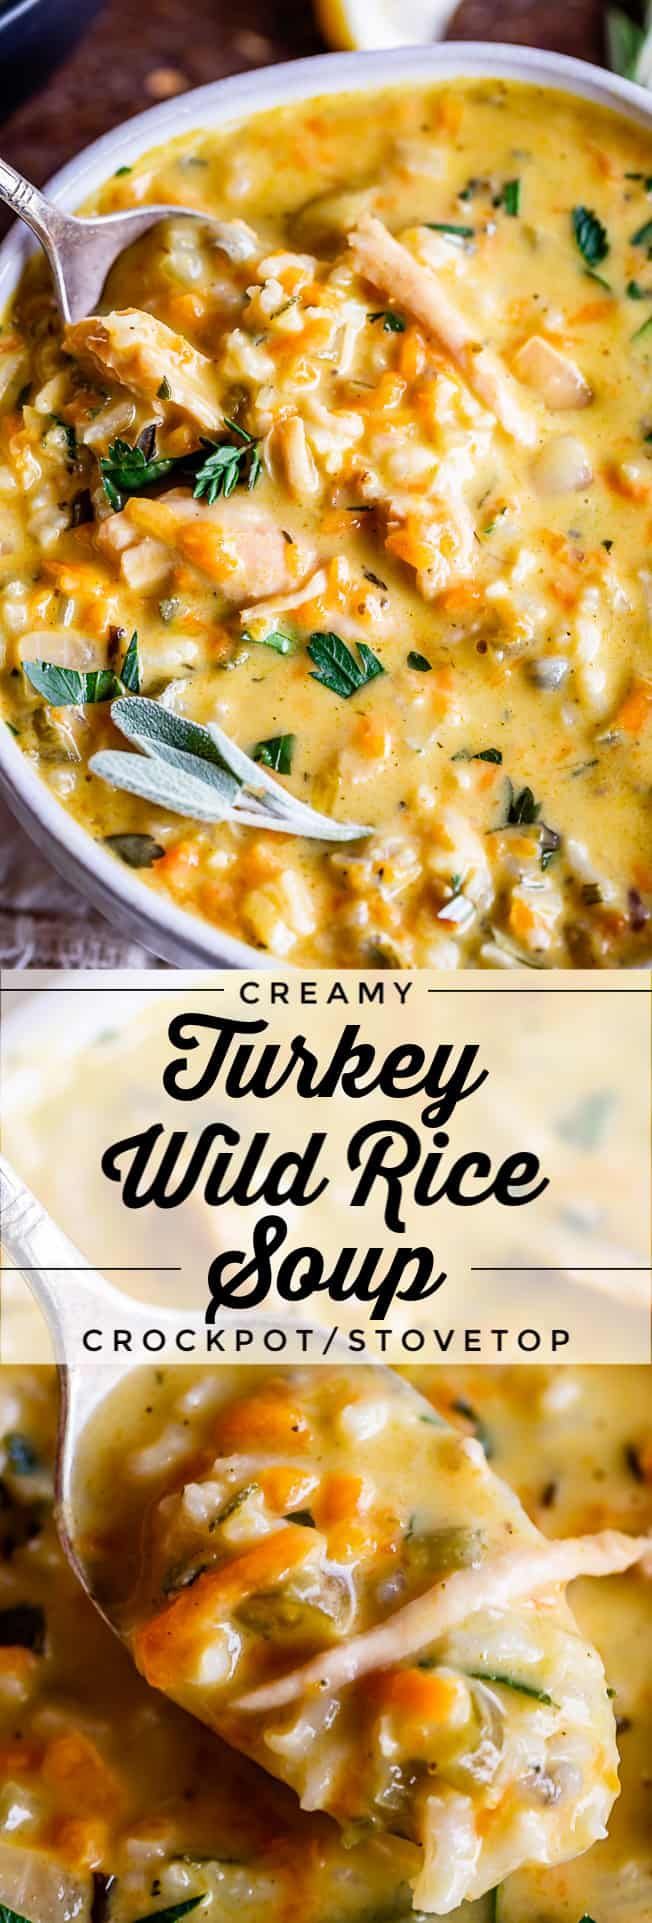 Creamy Turkey Wild Rice Soup recipe from The Food Charlatan -   19 turkey soup crockpot healthy ideas